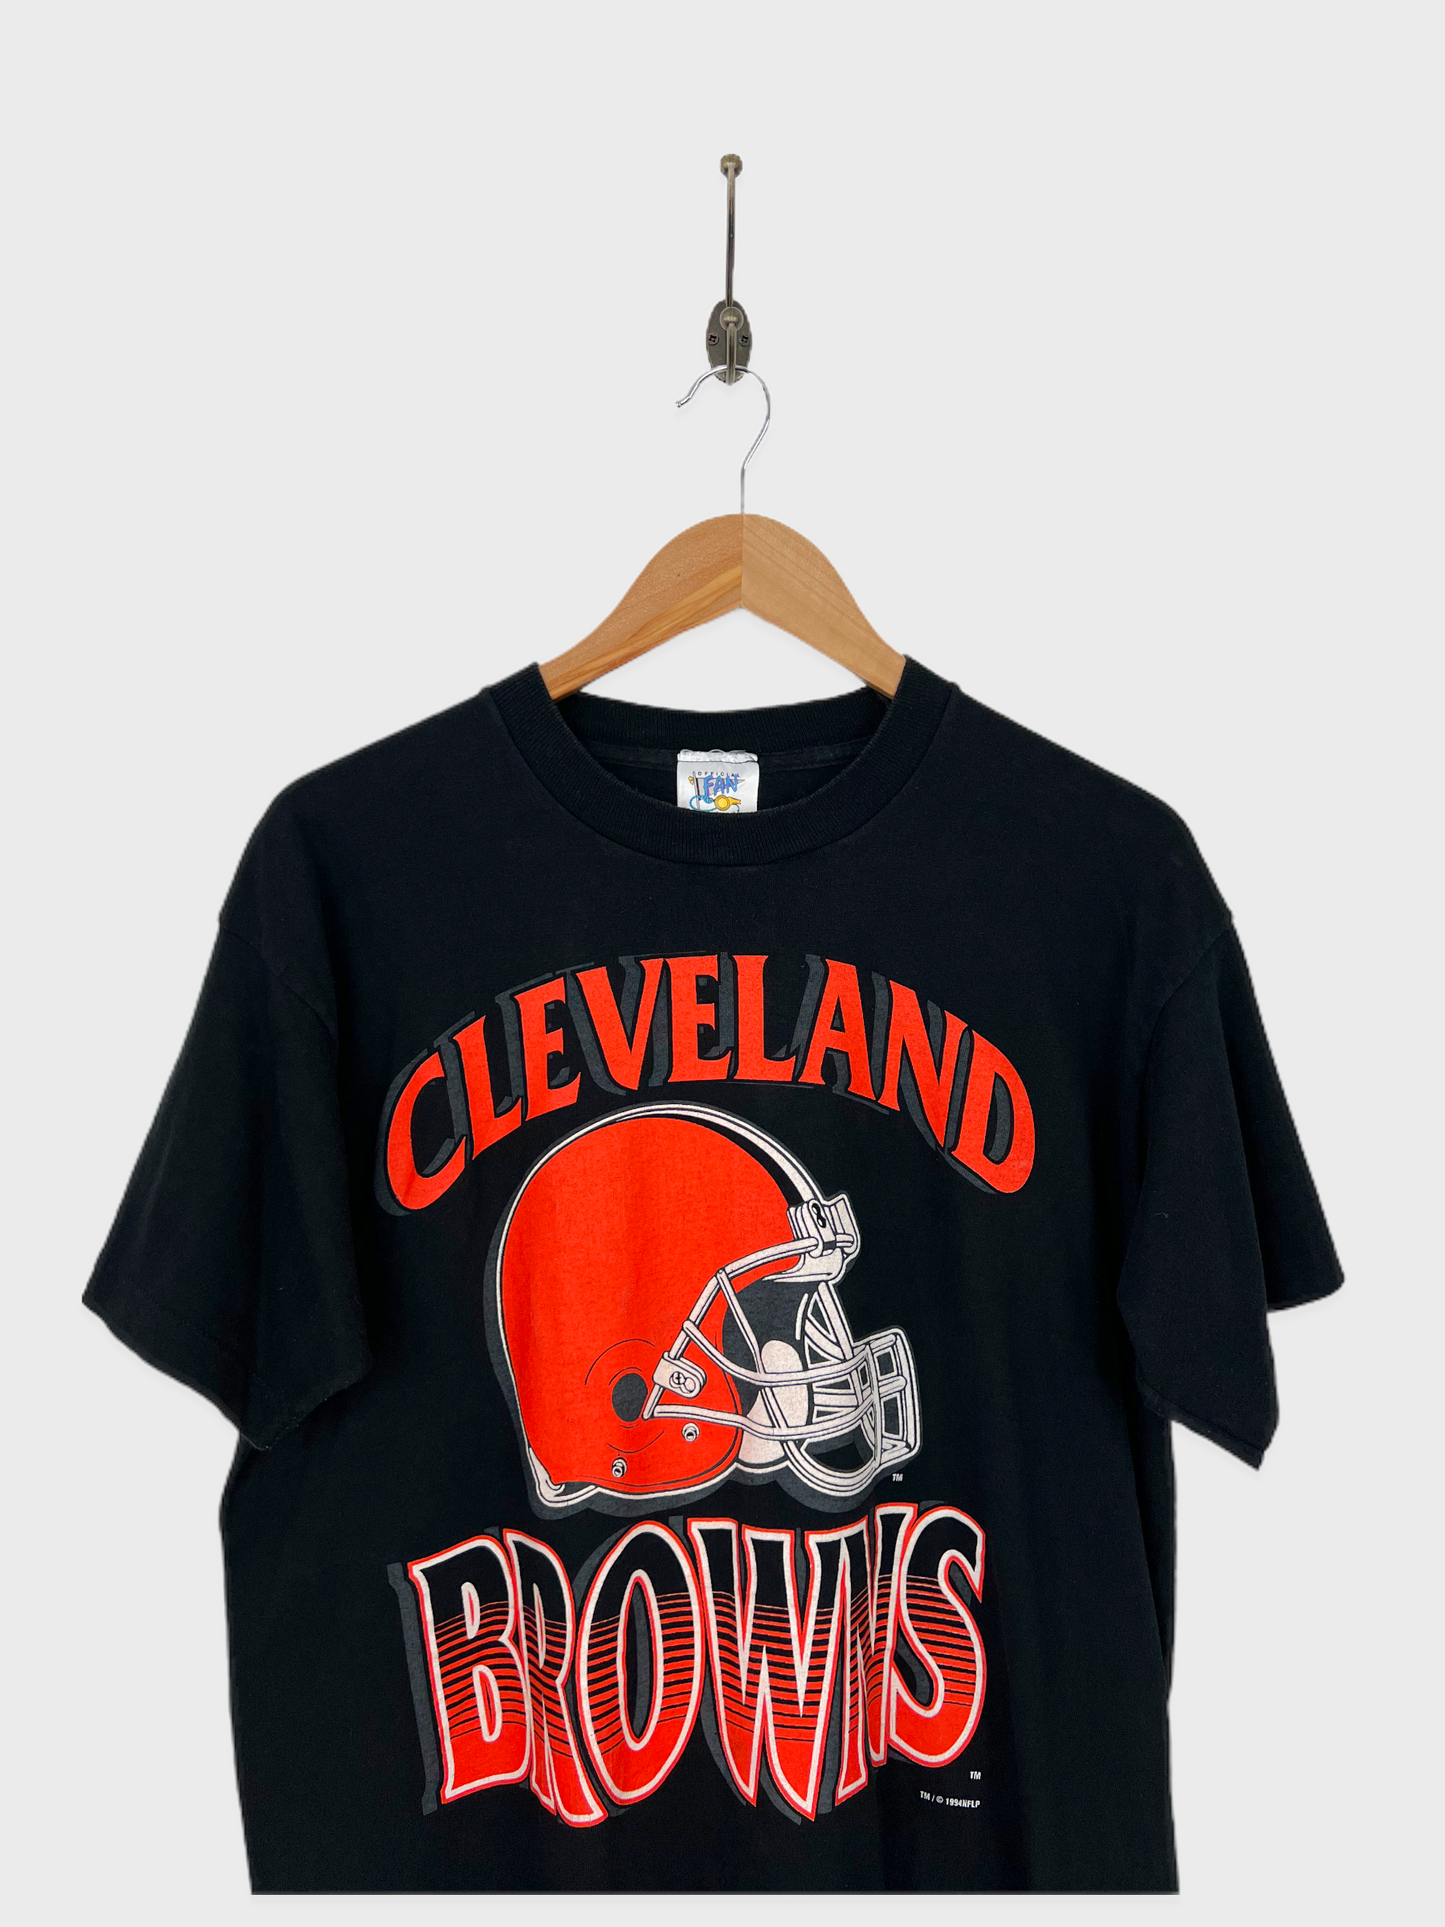 1994 Cleveland Browns NFL USA Made Vintage T-Shirt Size 12